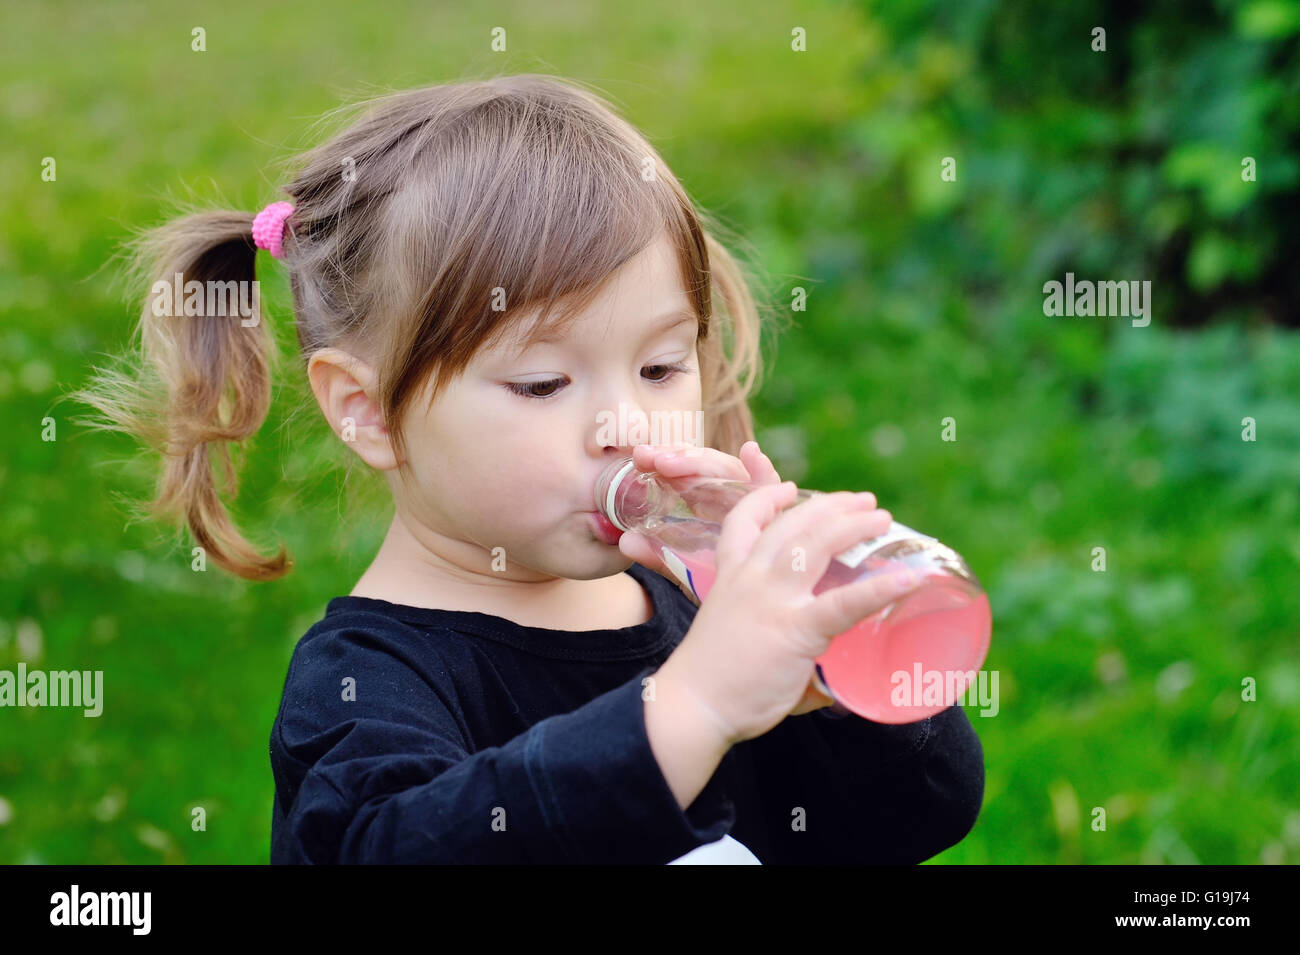 girl drinking from a bottle of lemonade, Outdoors Stock Photo